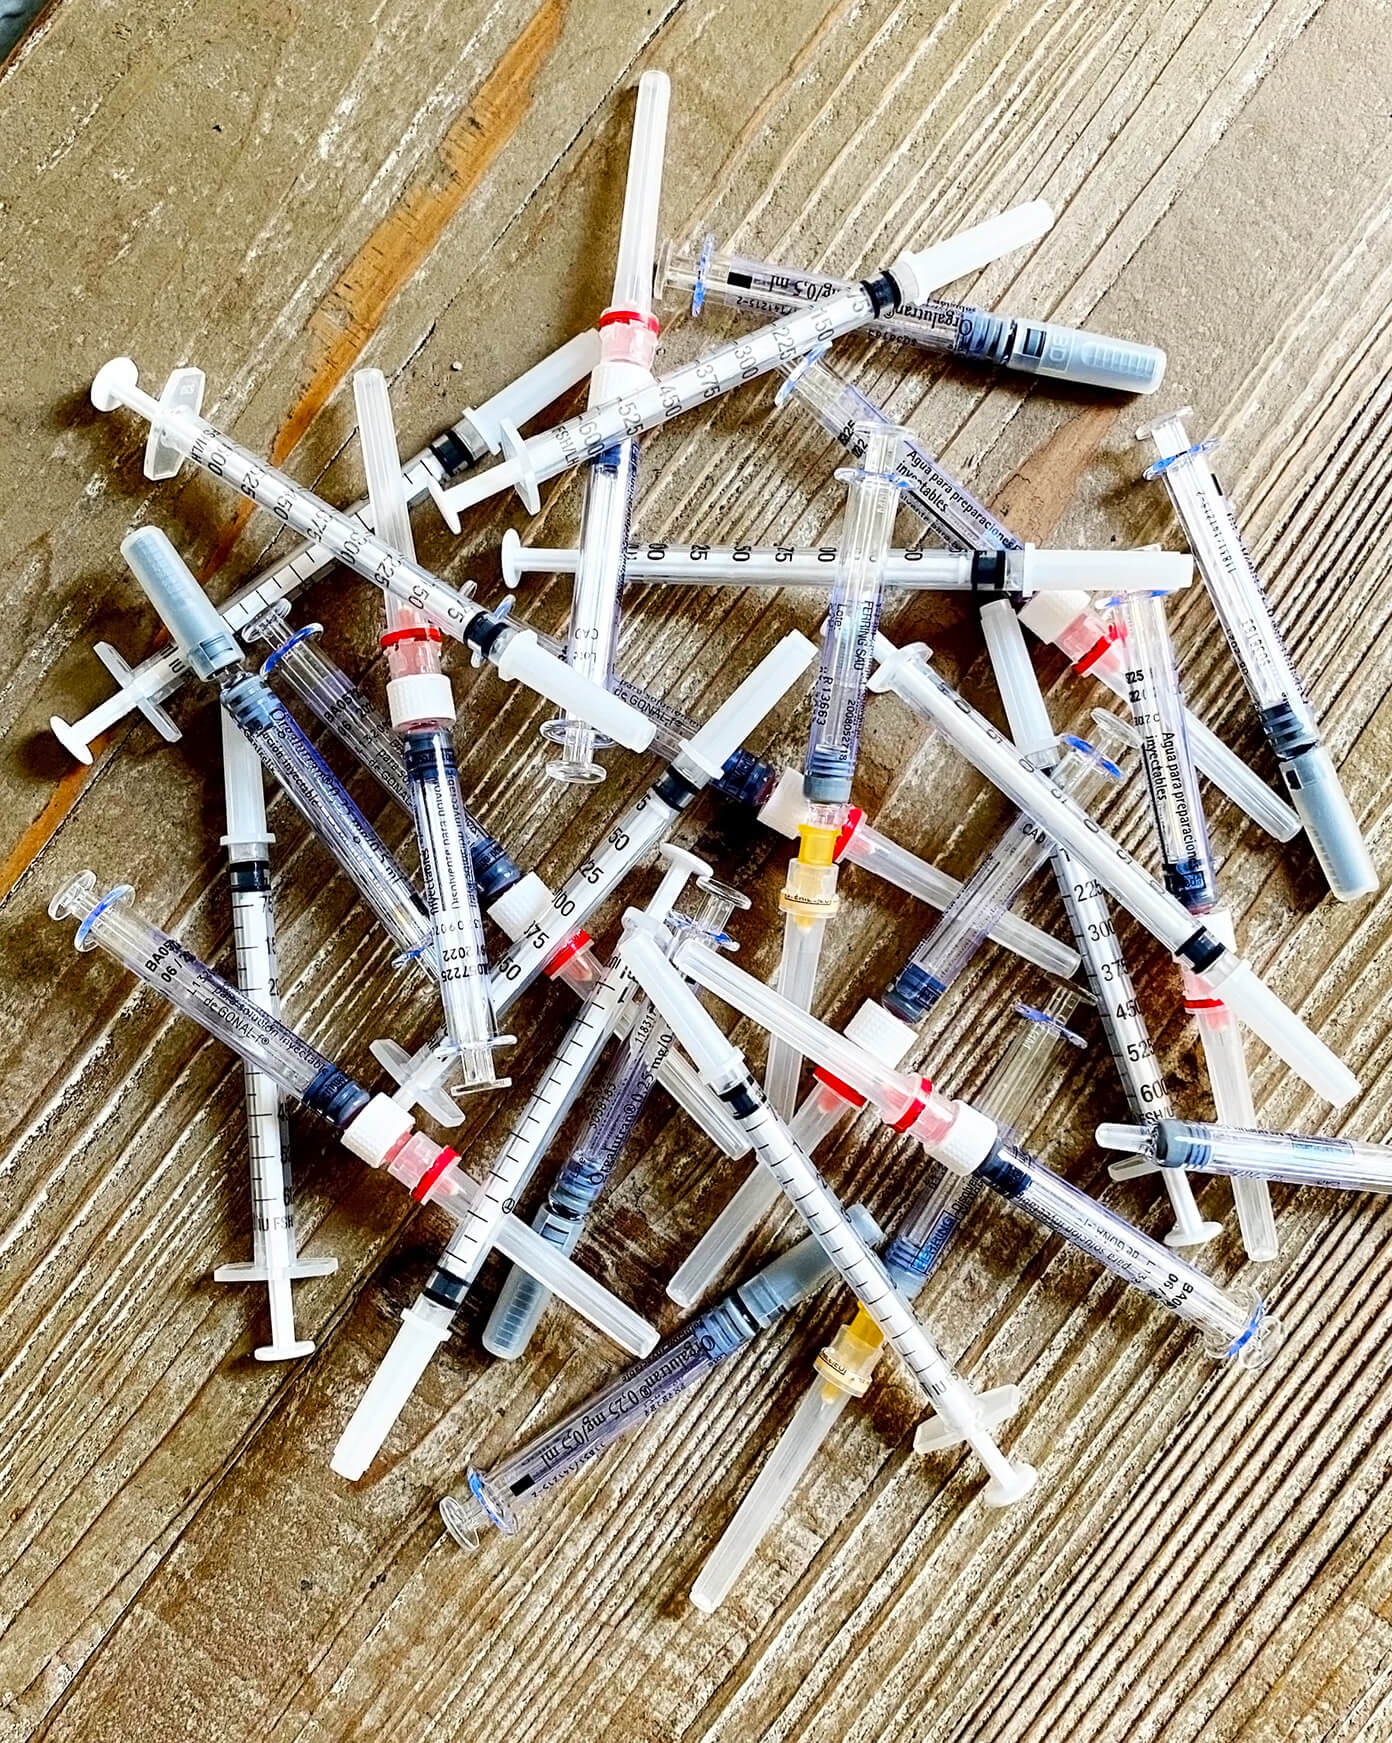 Pile of IVF syringes